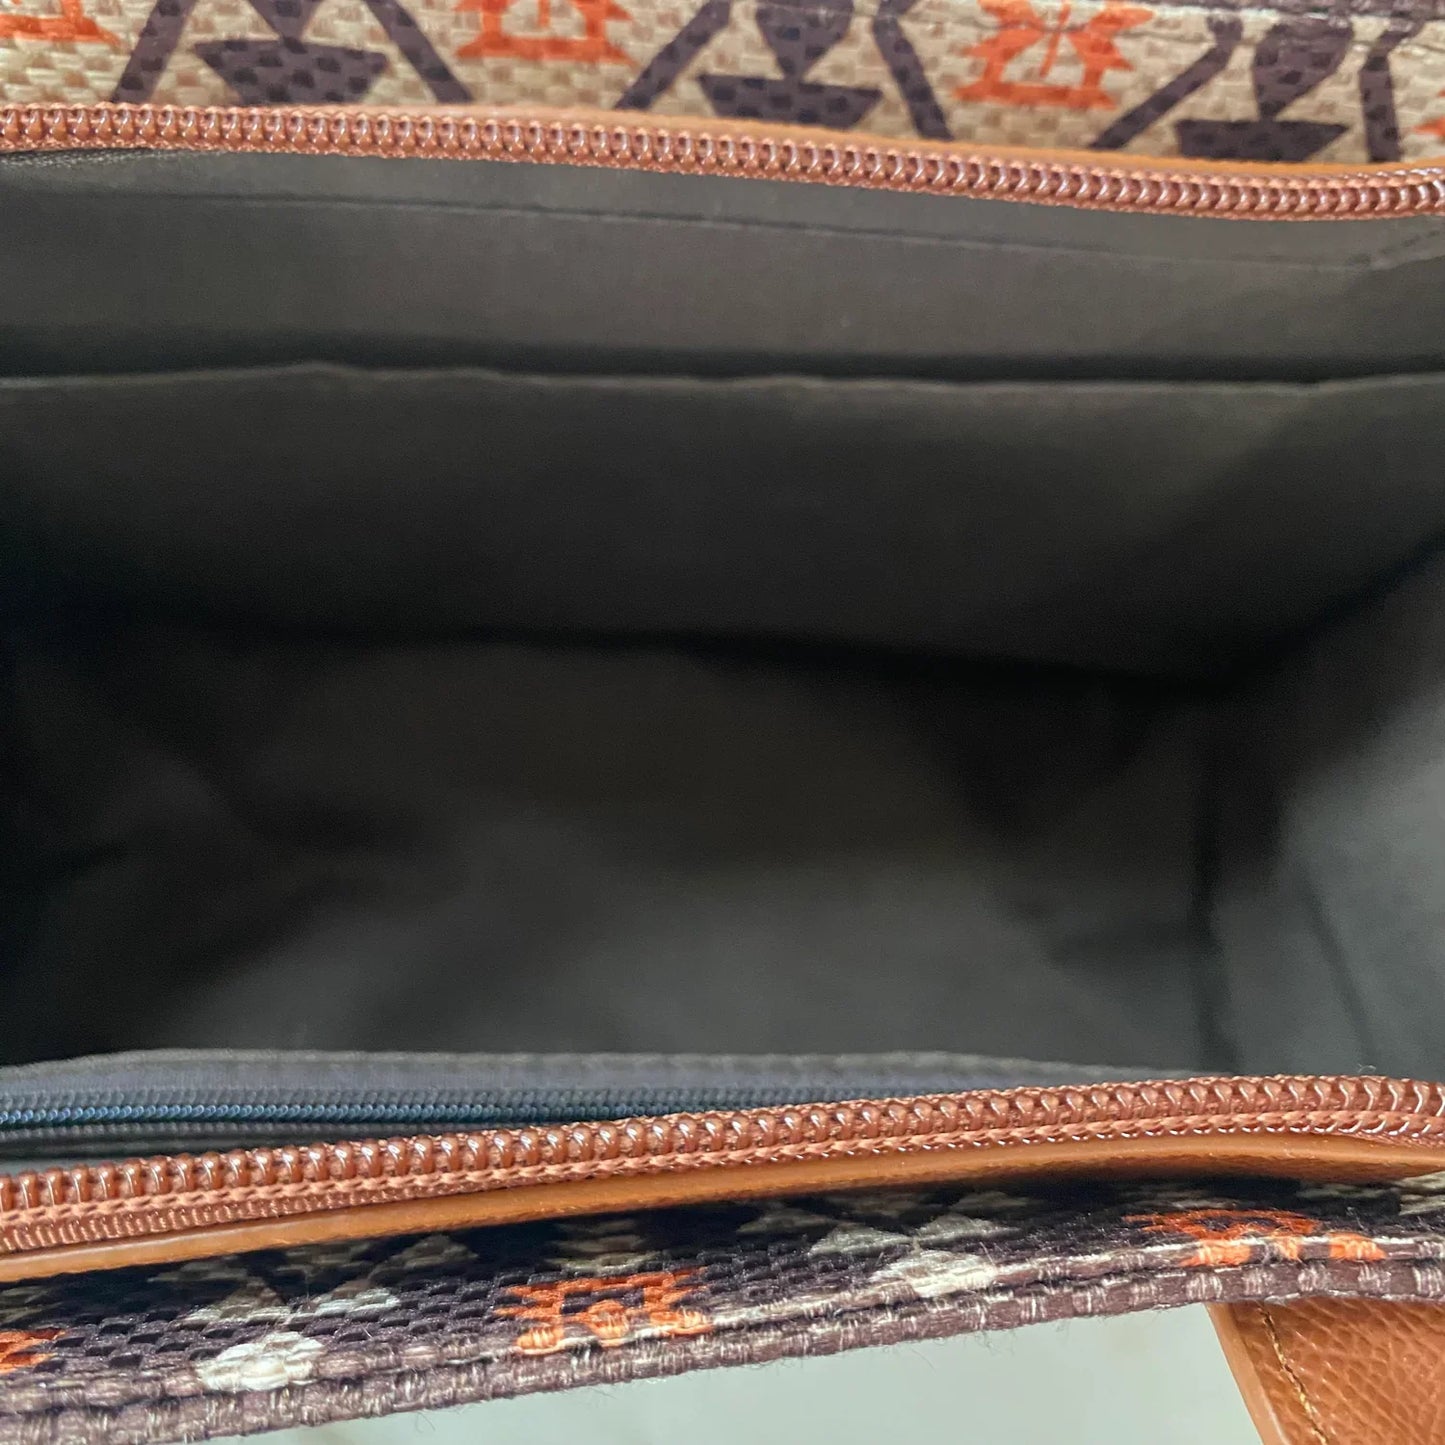 Arizona Tote Bag & Card Wallet in Dark Brown